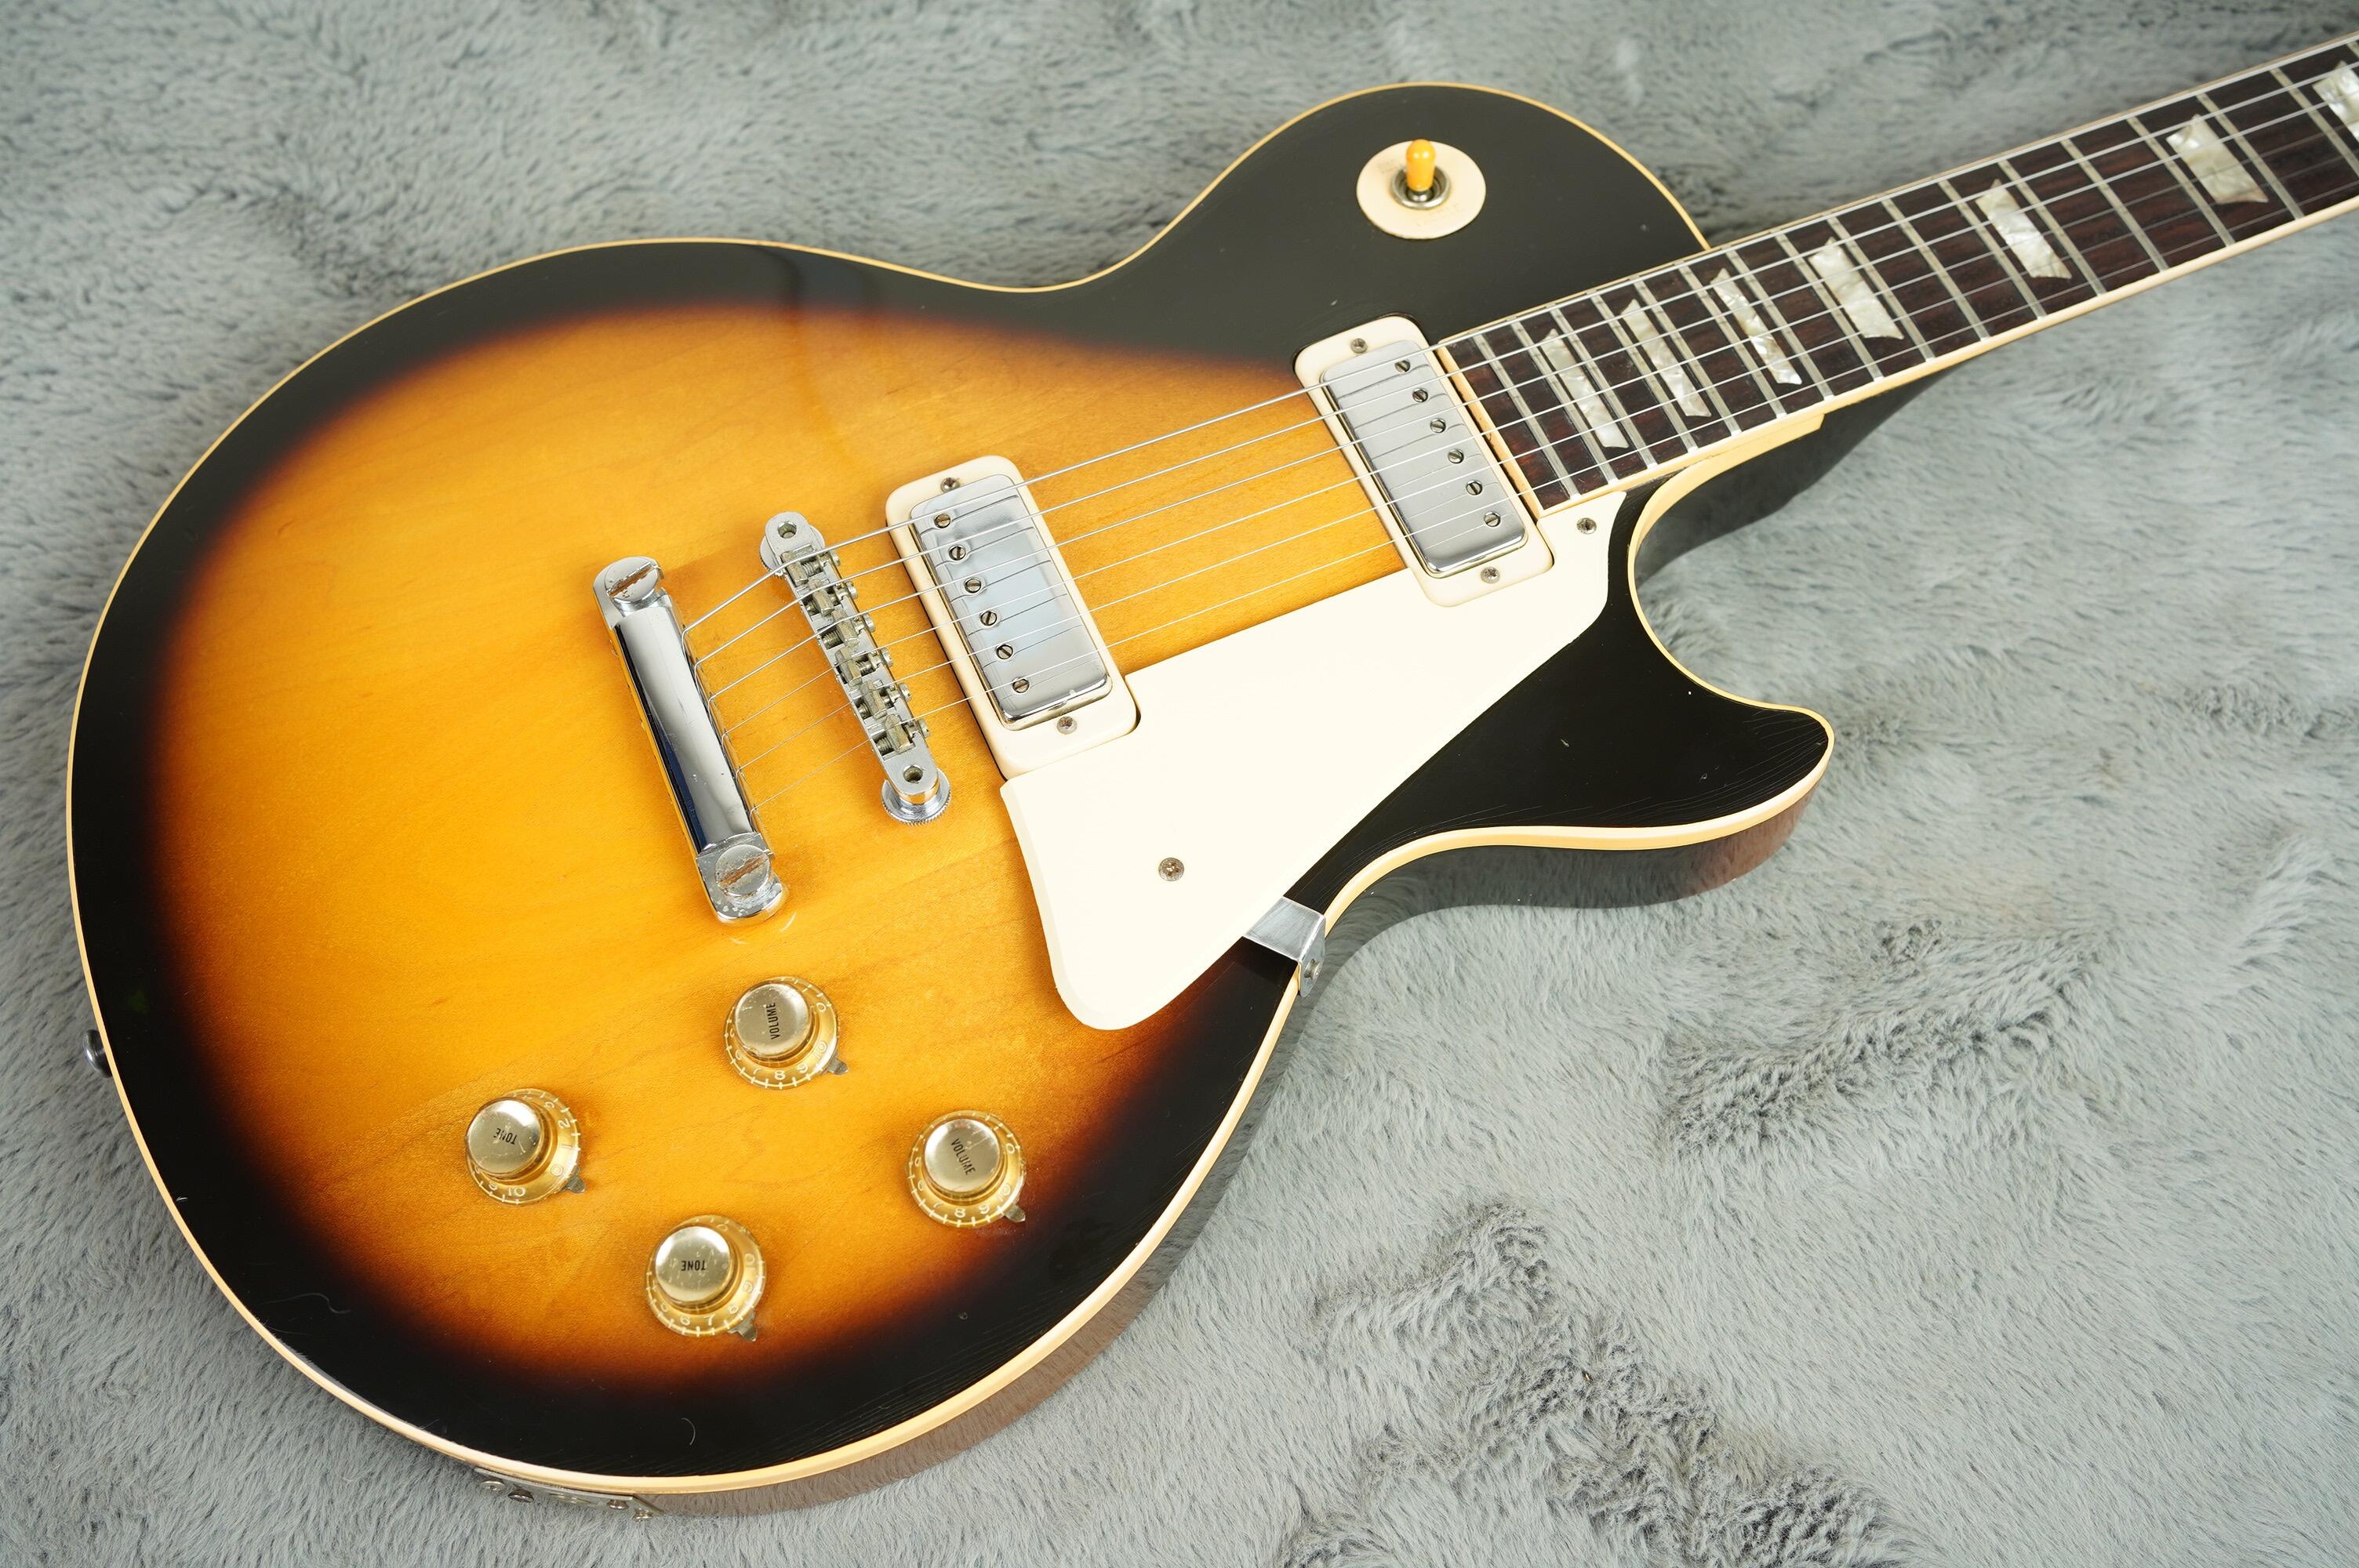 1974 Gibson Les Paul Deluxe tobacco sunburst